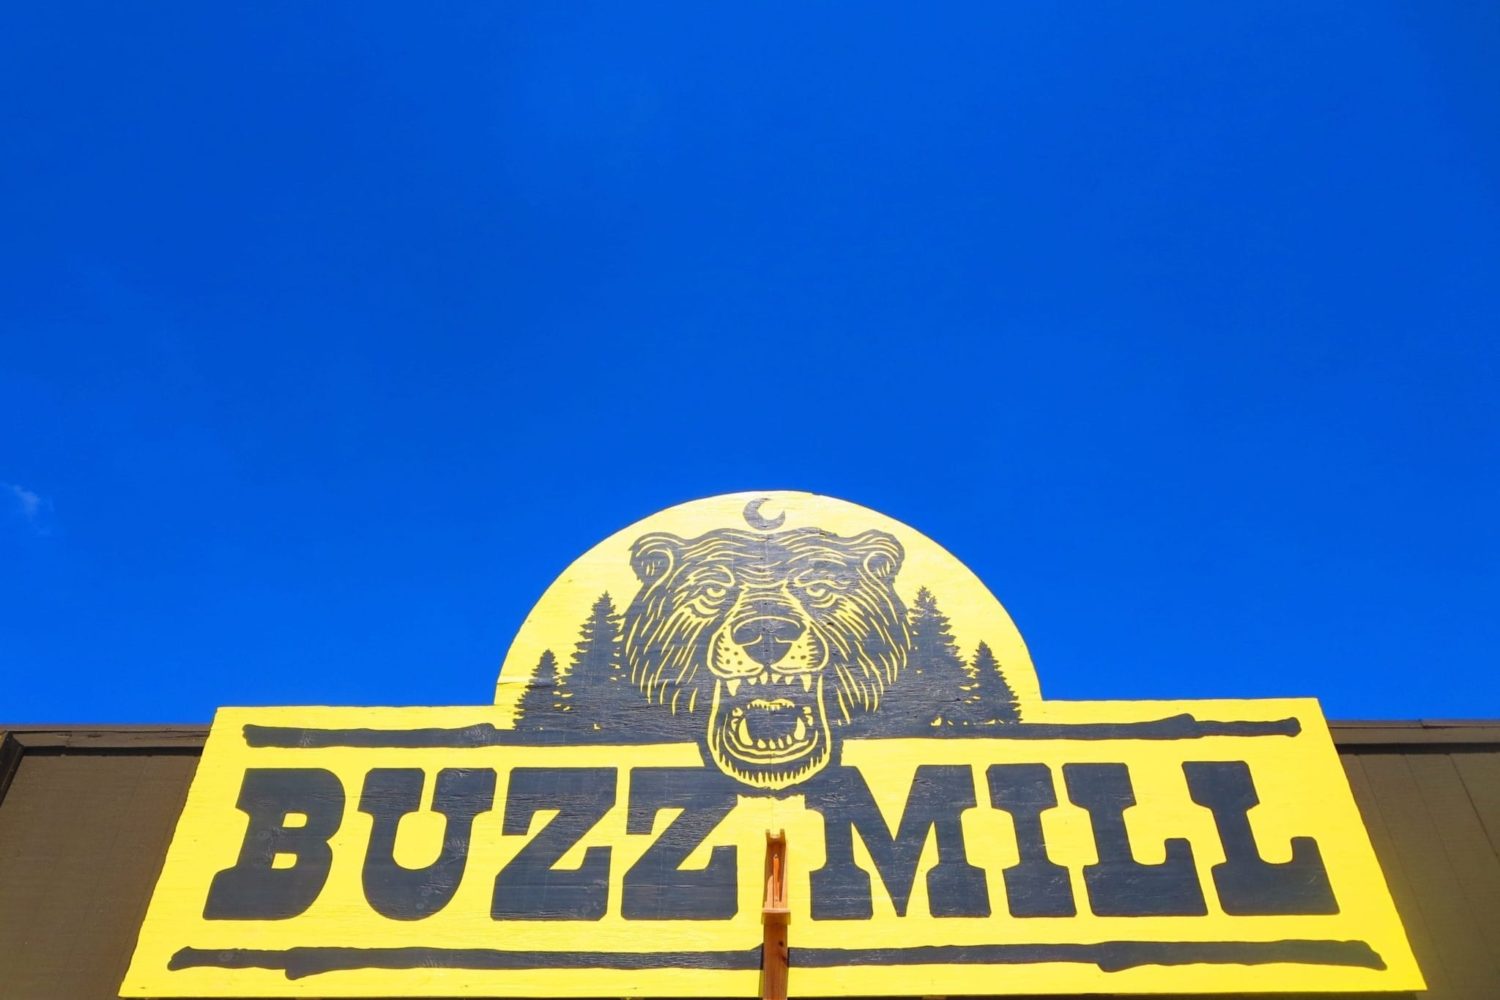 Buzz Mill